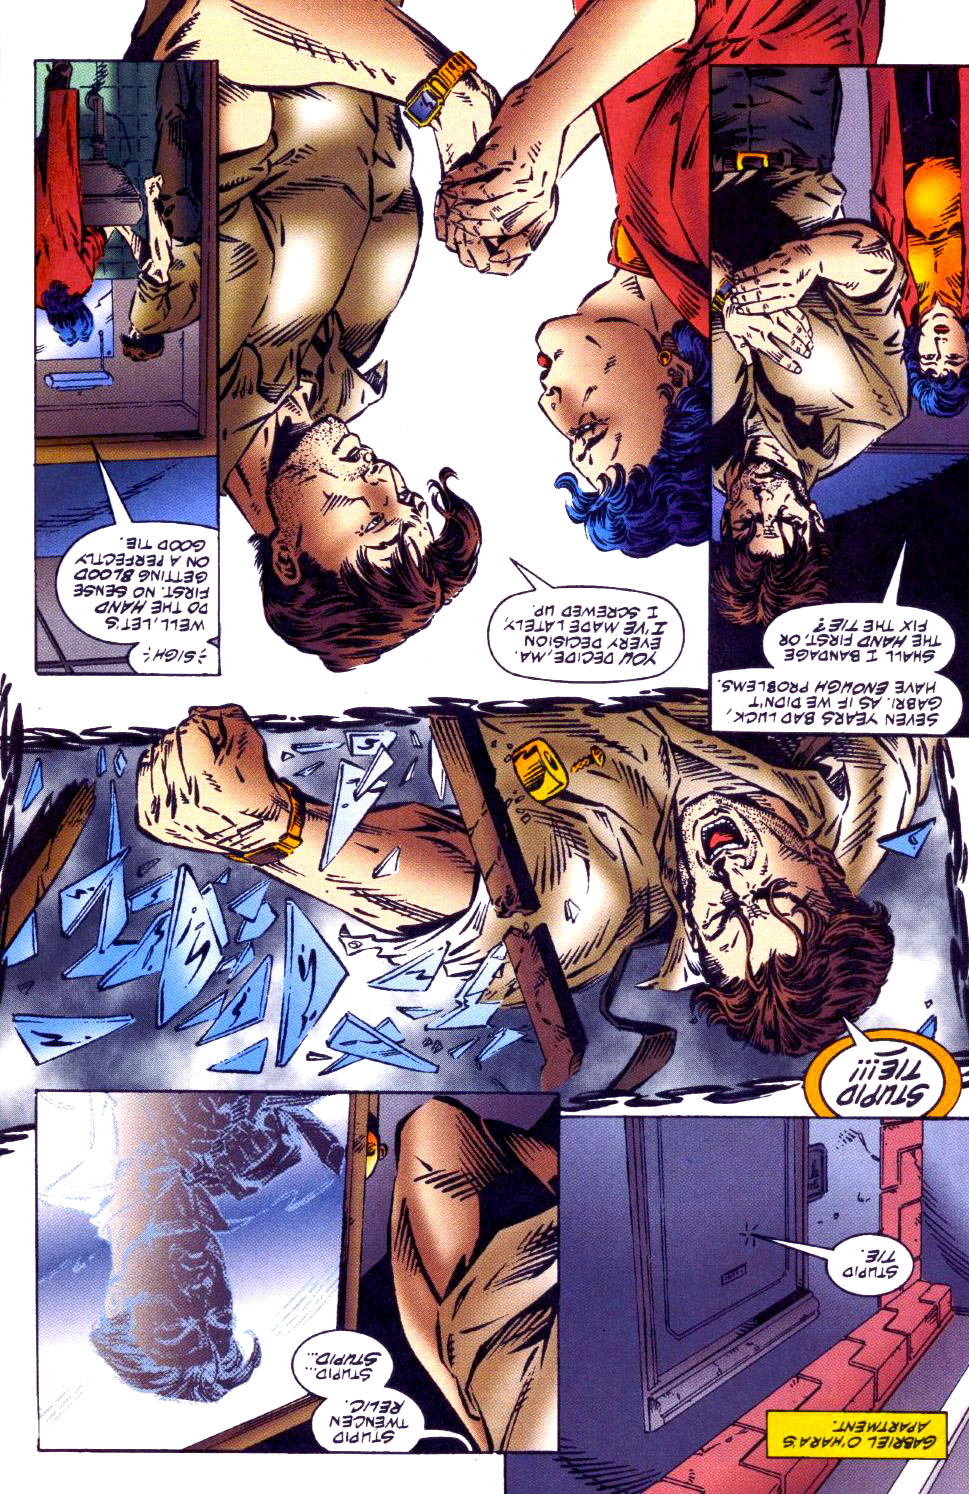 Spider-Man 2099 (1992) issue 41 - Page 14